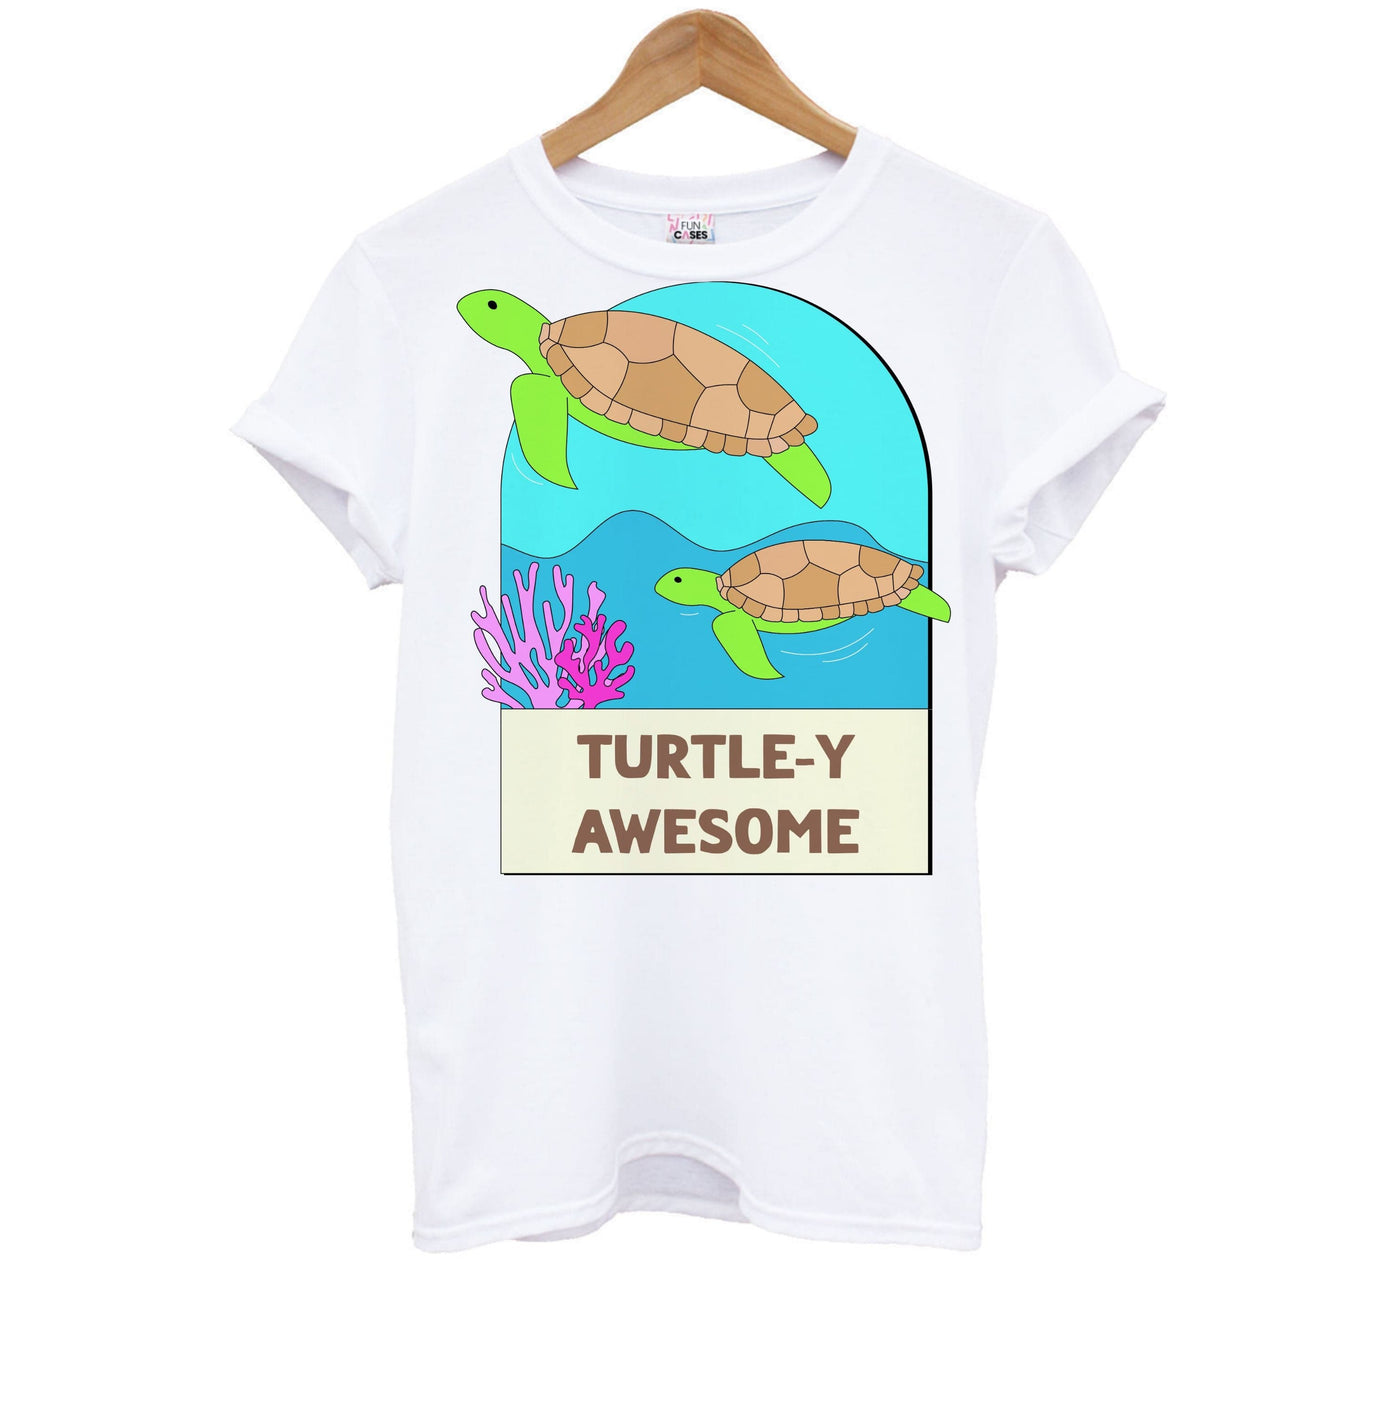 Turtle-y Awesome - Sealife Kids T-Shirt